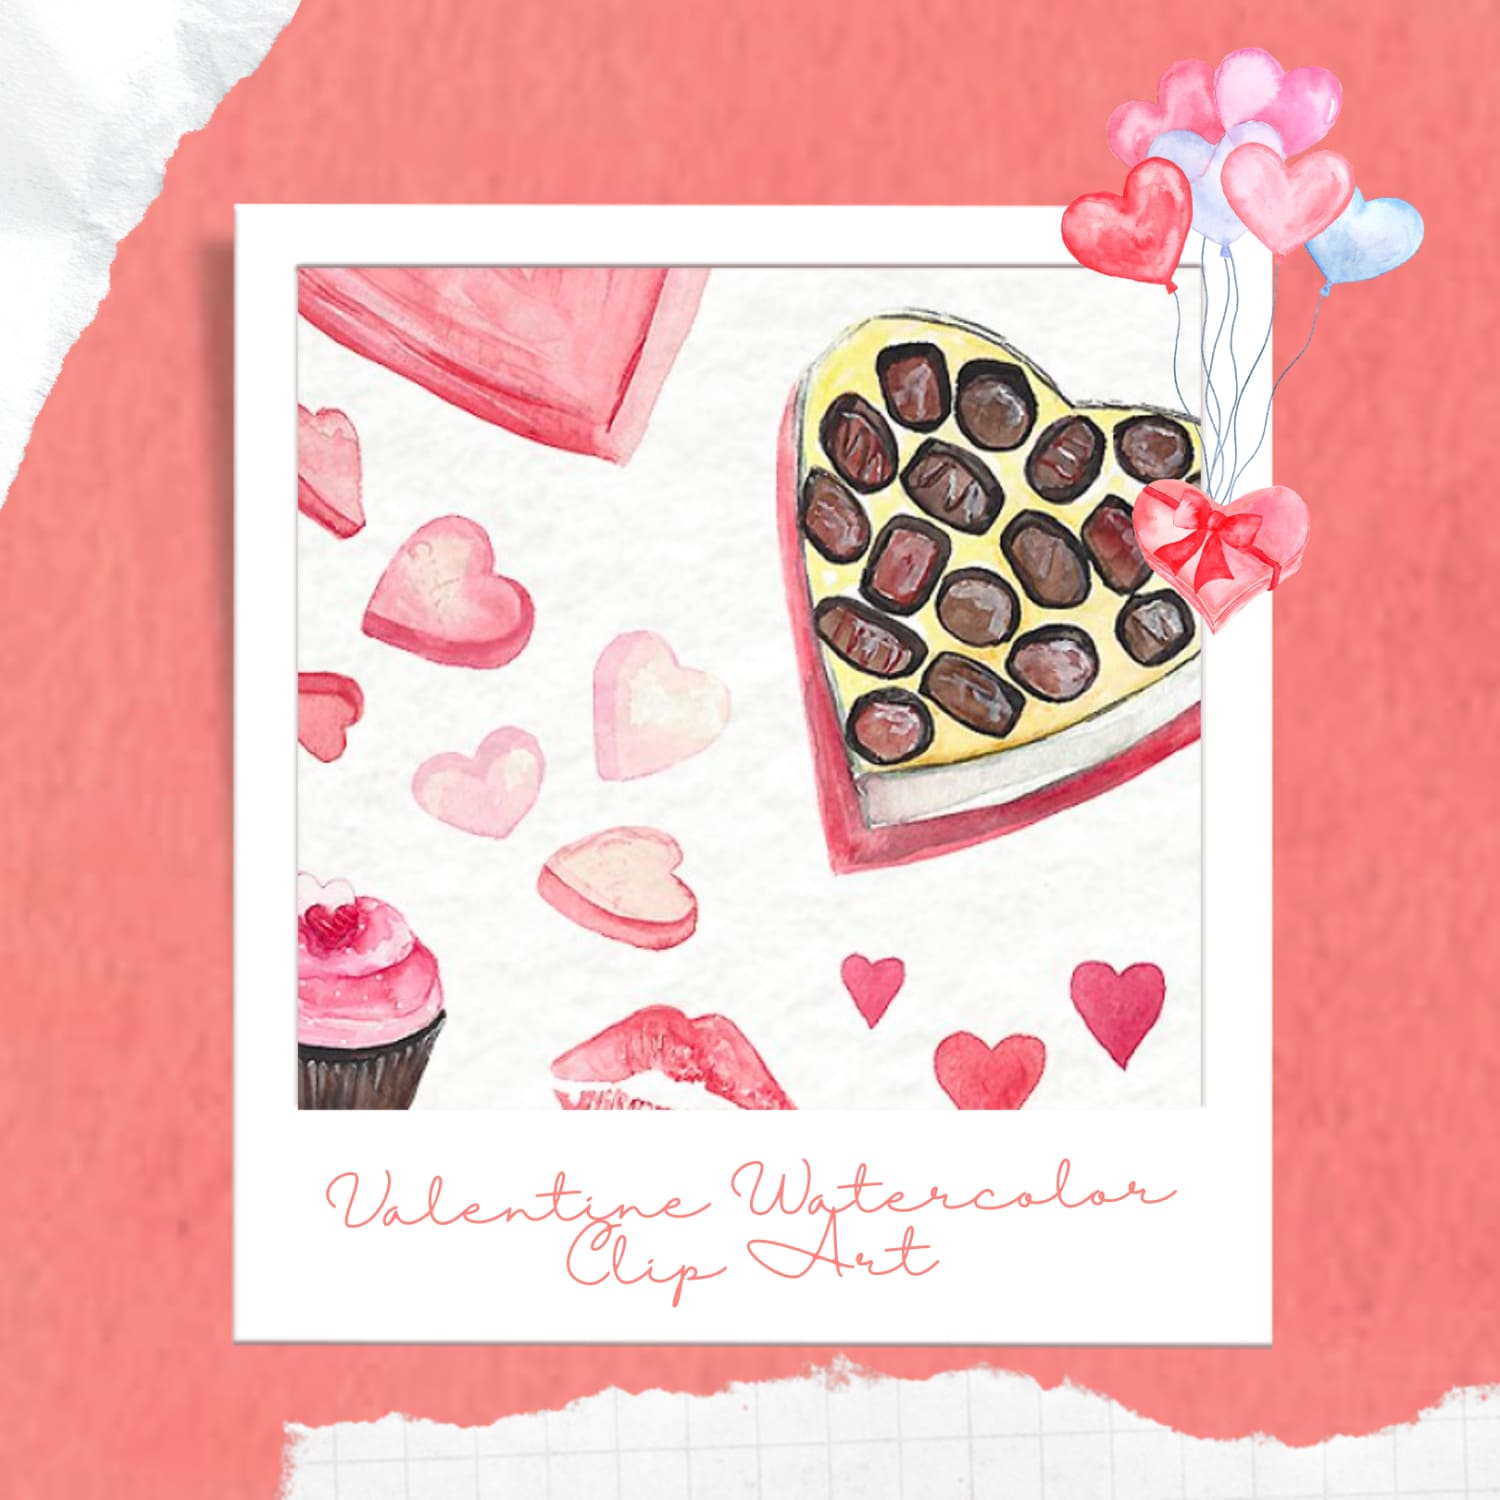 Valentine Watercolor Clip Art - main image preview.